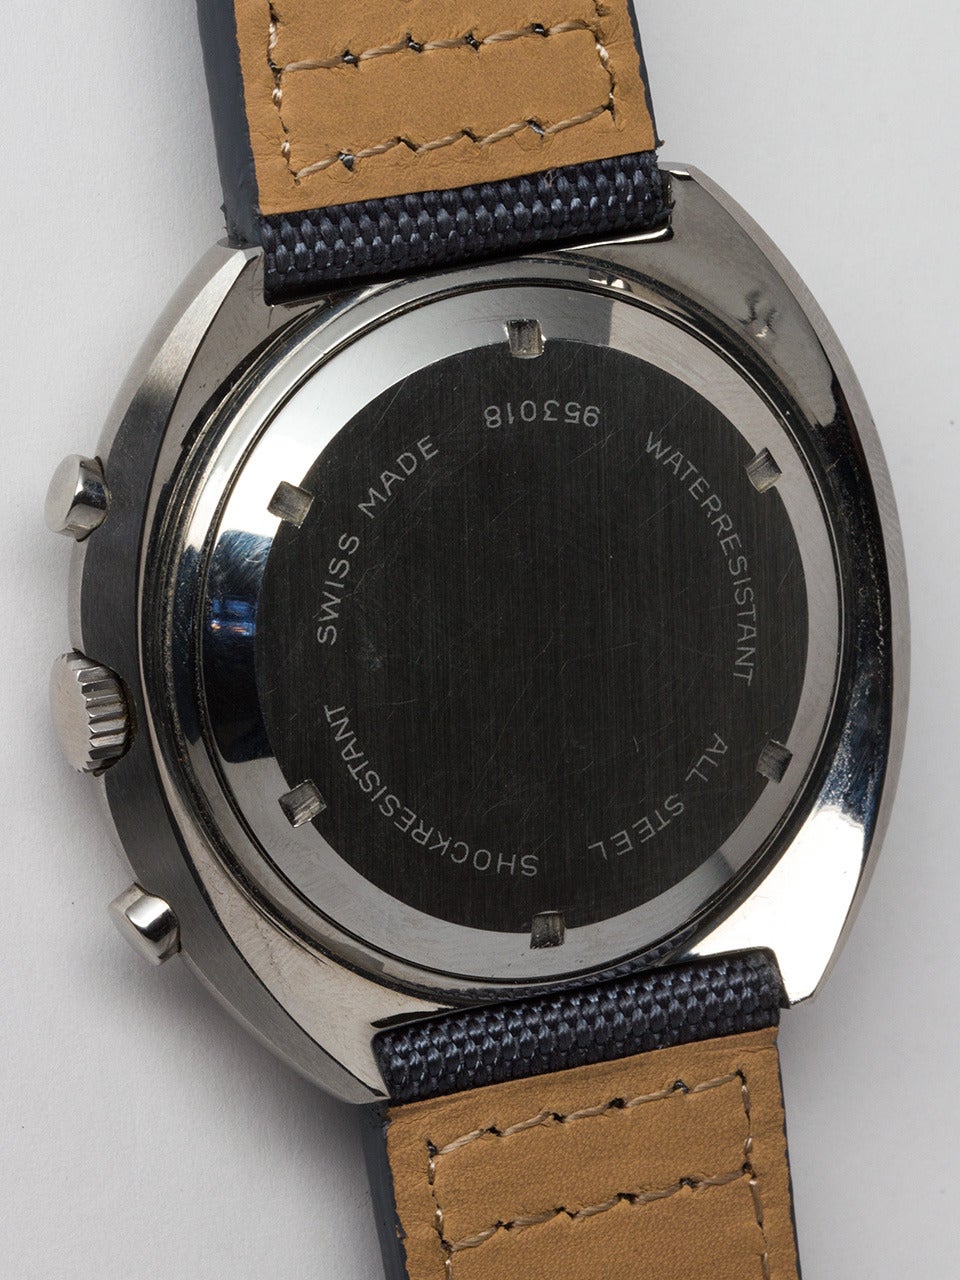 Men's BWC Swiss Stainless Steel Chronograph Wristwatch circa 1970s